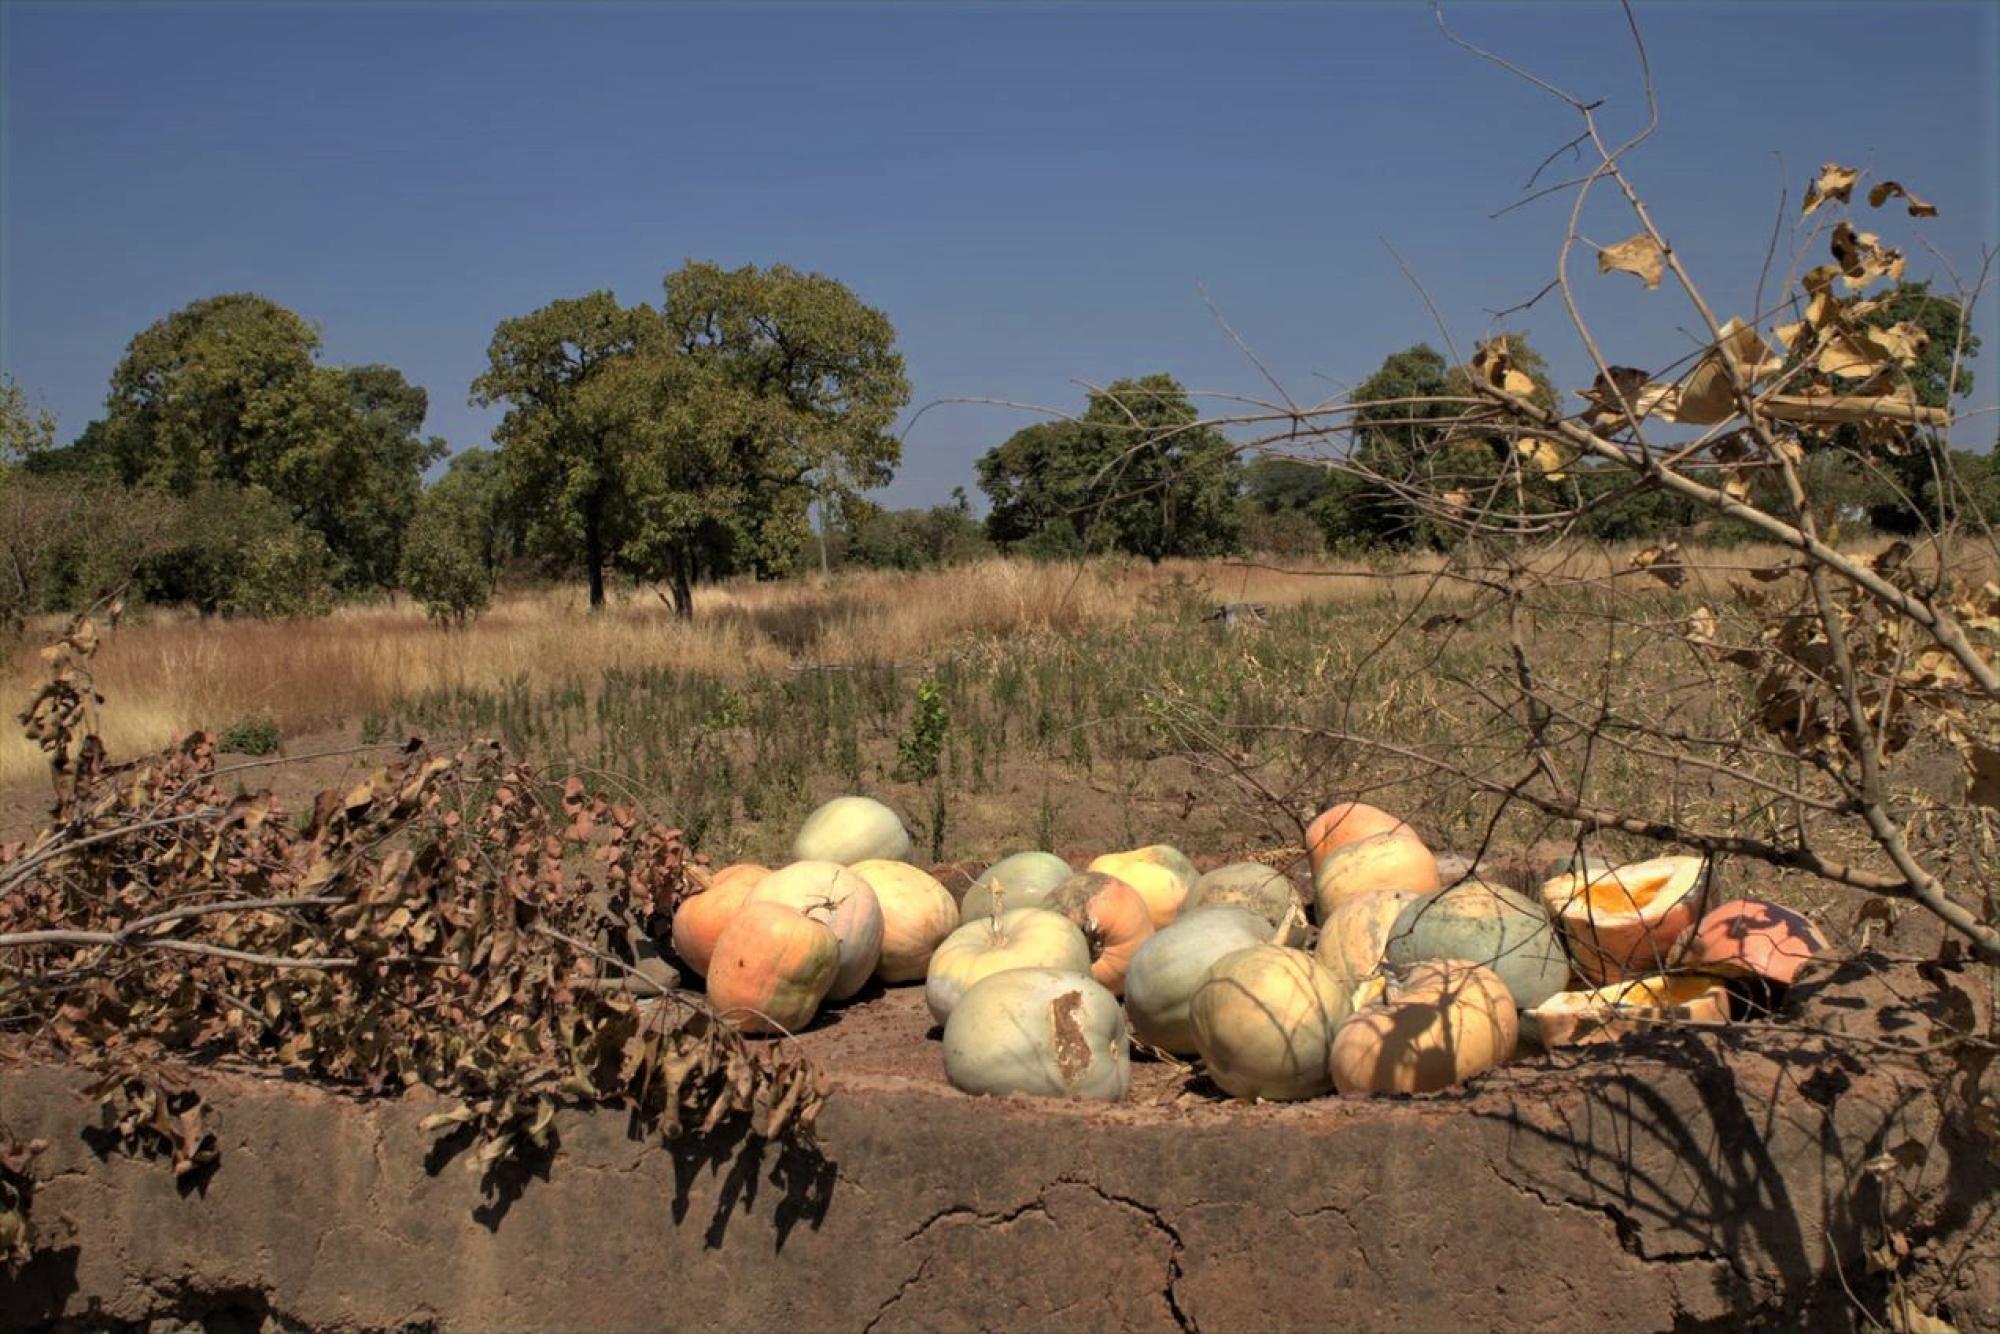 Pumpkins in the sun in Tororo, Uganda